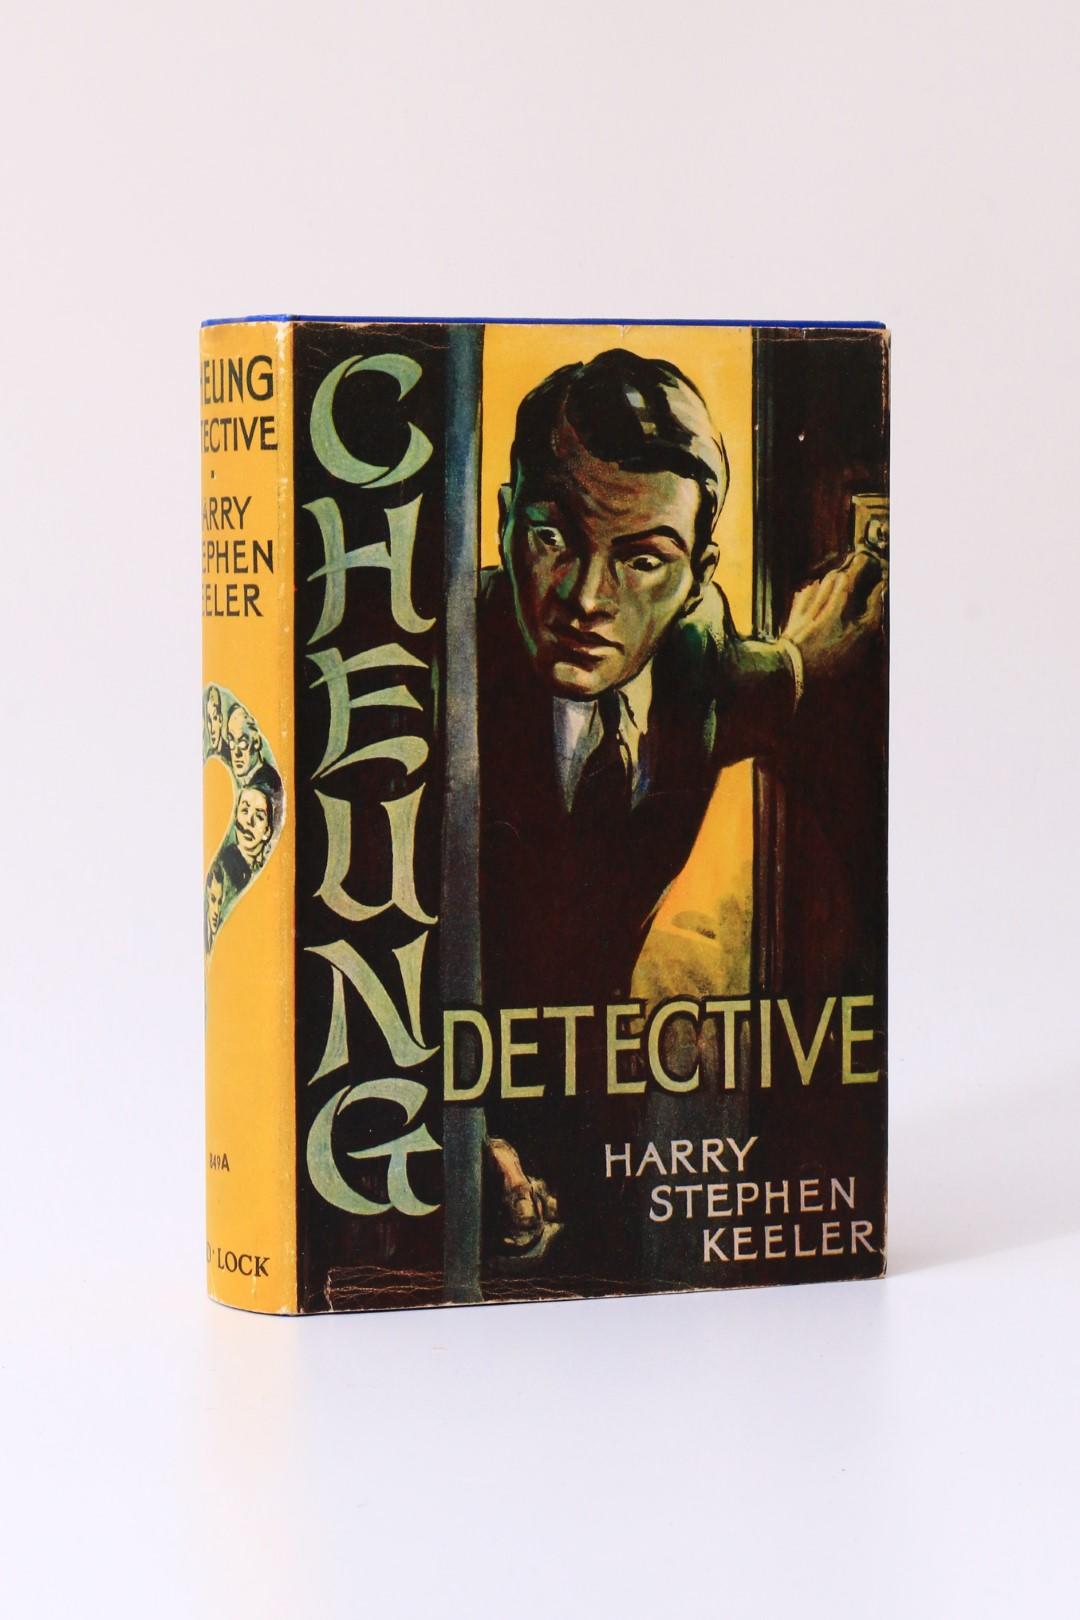 Harry Stephen Keeler - Cheung, Detective - Ward Lock, 1938, First Edition.